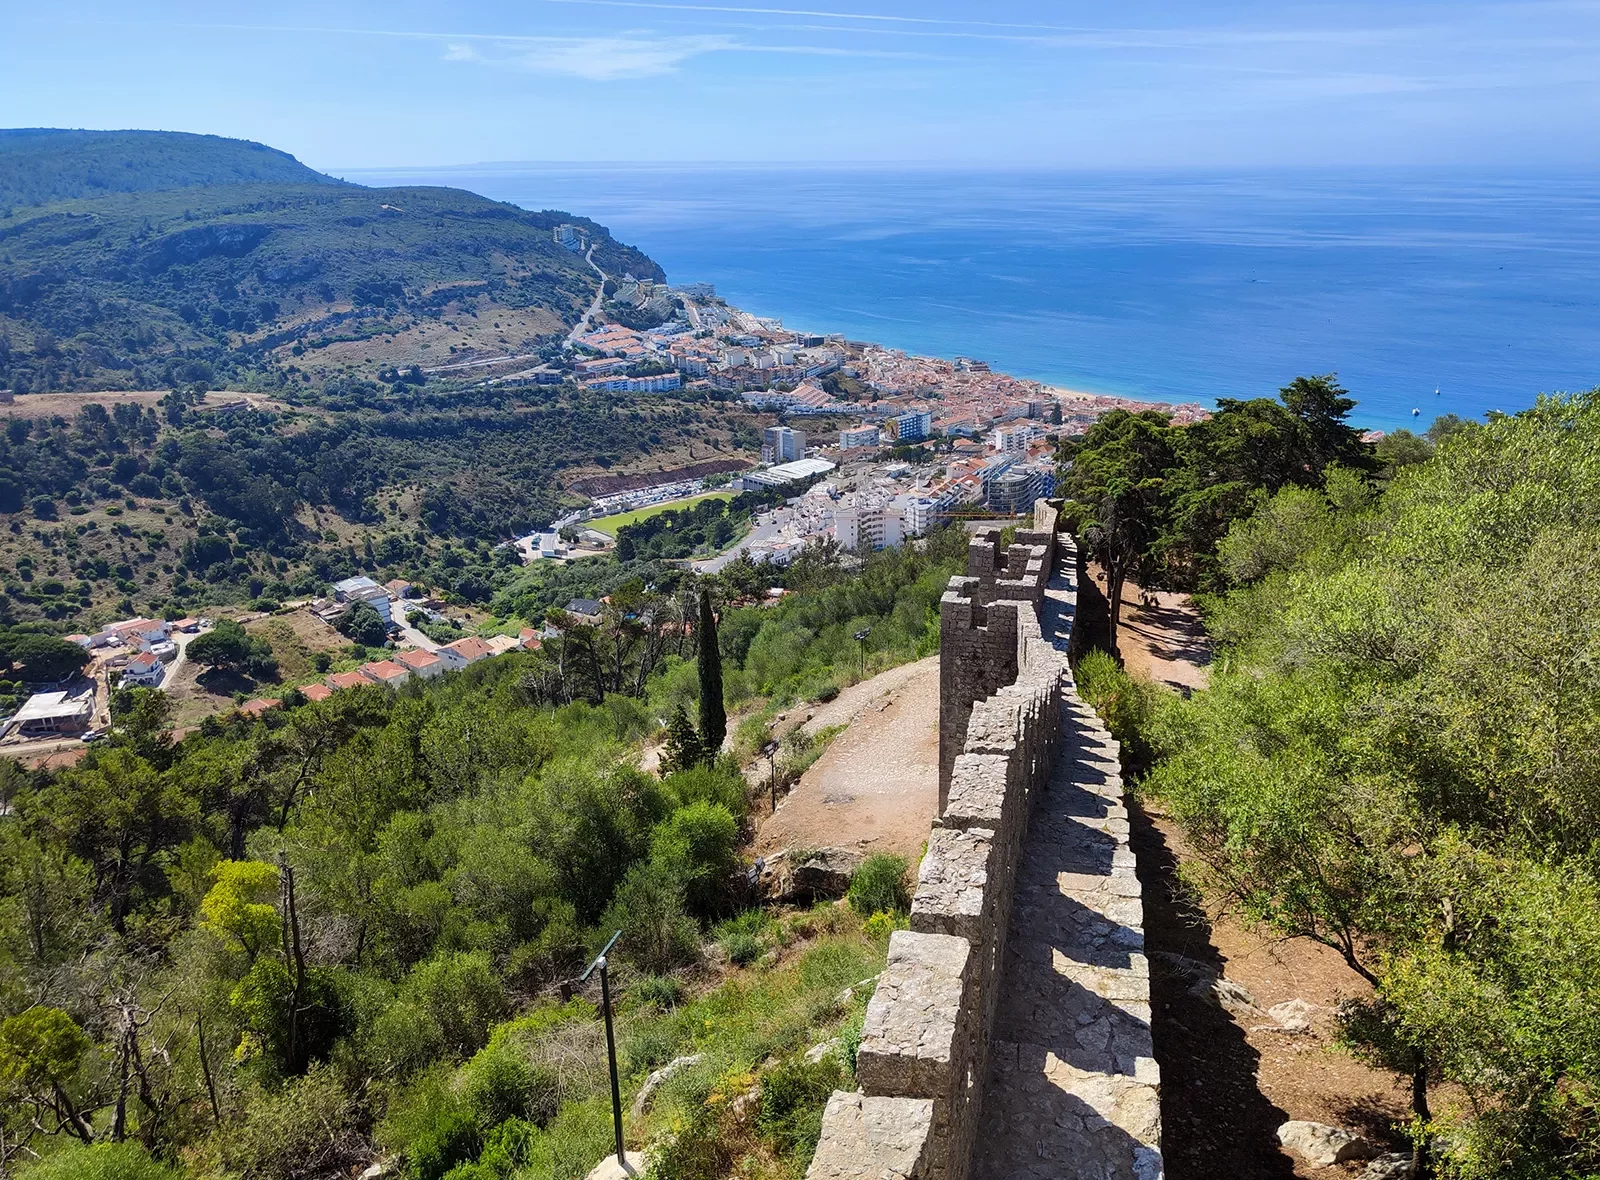 Shot form the wall at Castelo de Sesimbra, overlooking coastal valley town.